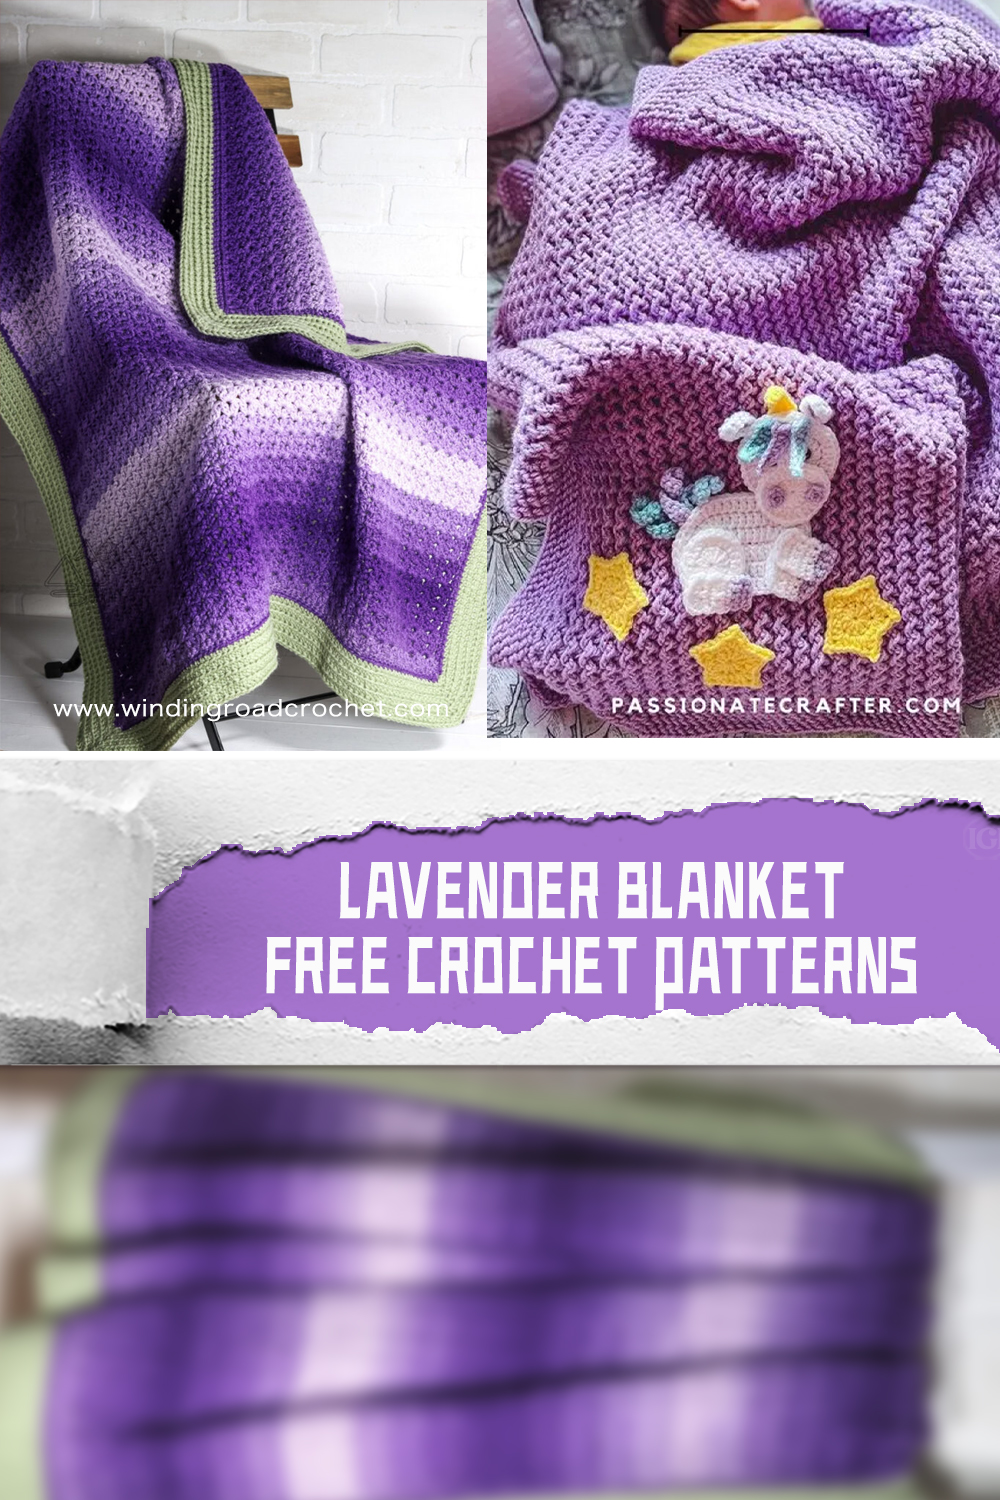 Crochet Lavender Blanket FREE Patterns